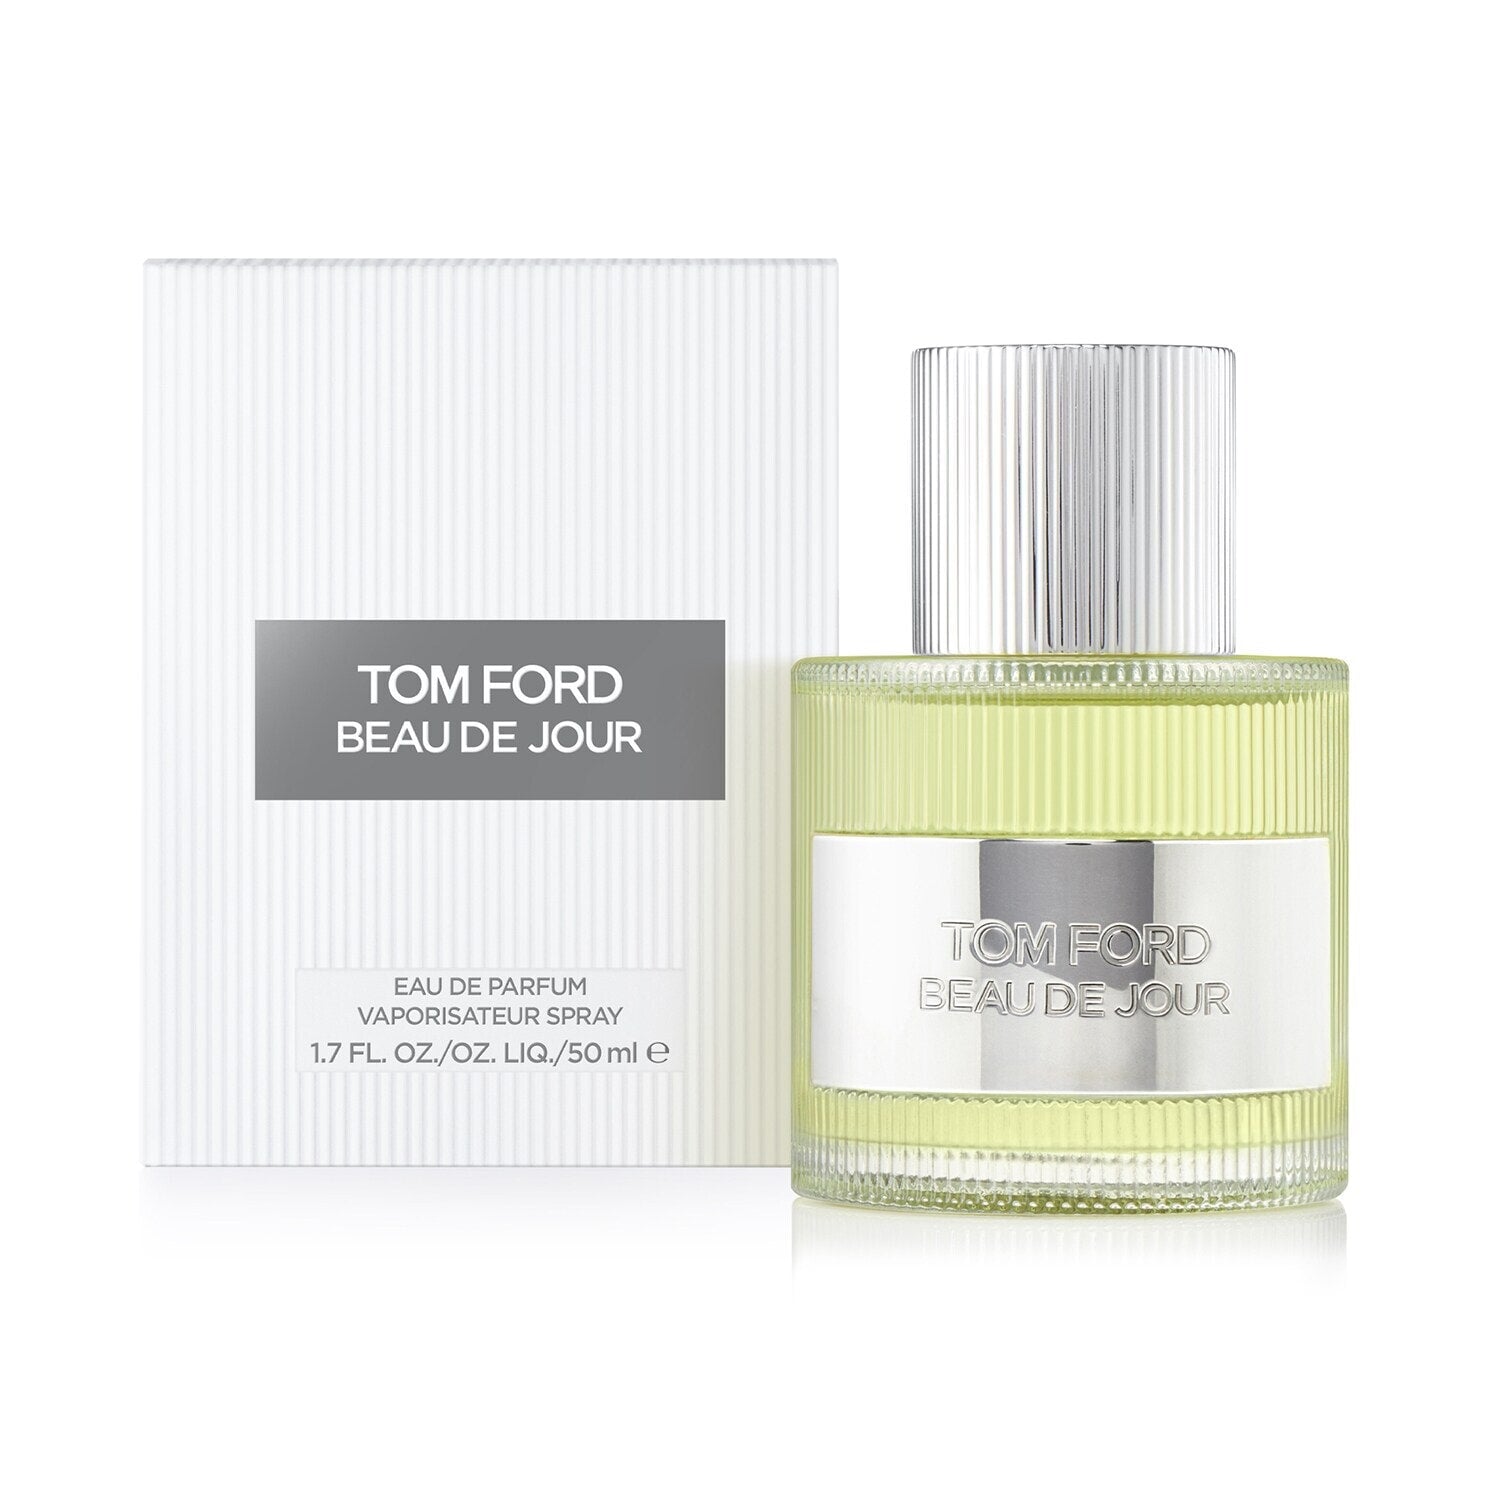 Tom Ford Beau De Jour EDP | My Perfume Shop Australia